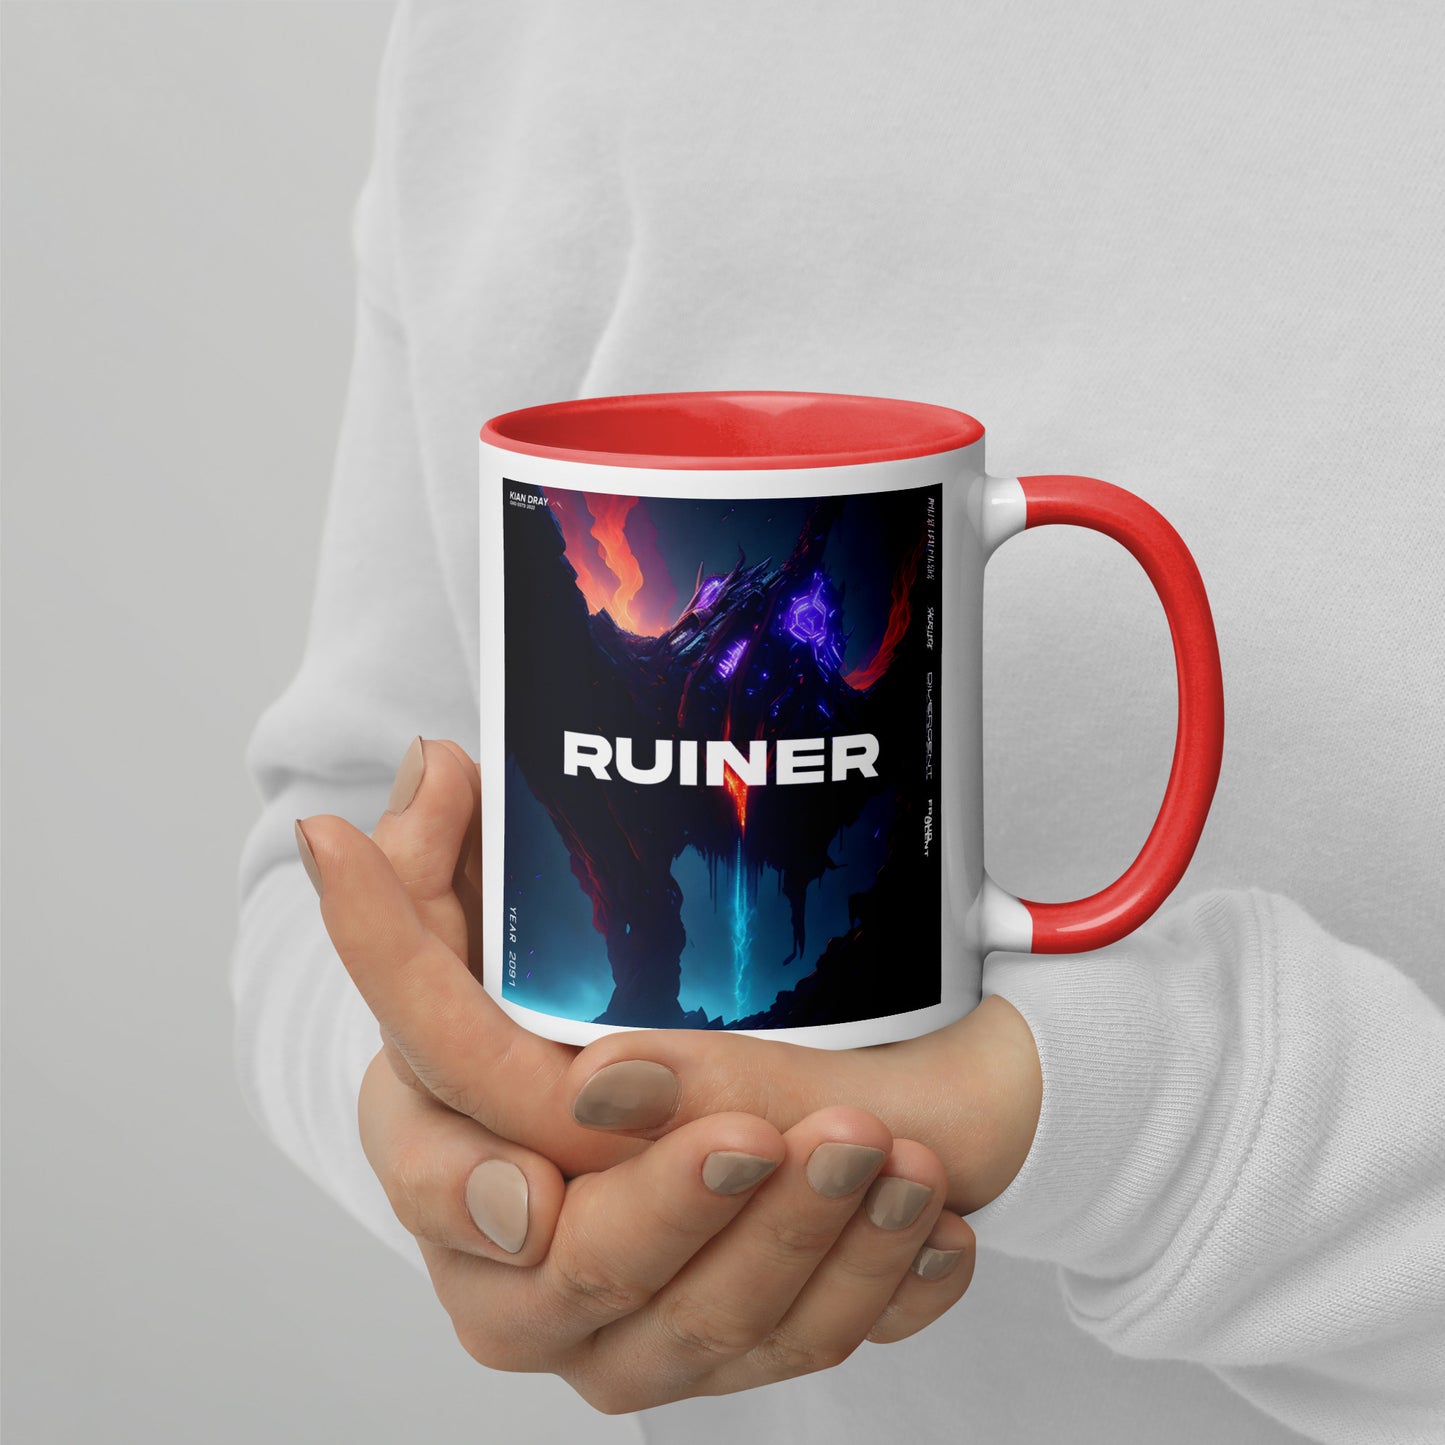 Kian Dray - Ruiner Mug With Color Inside